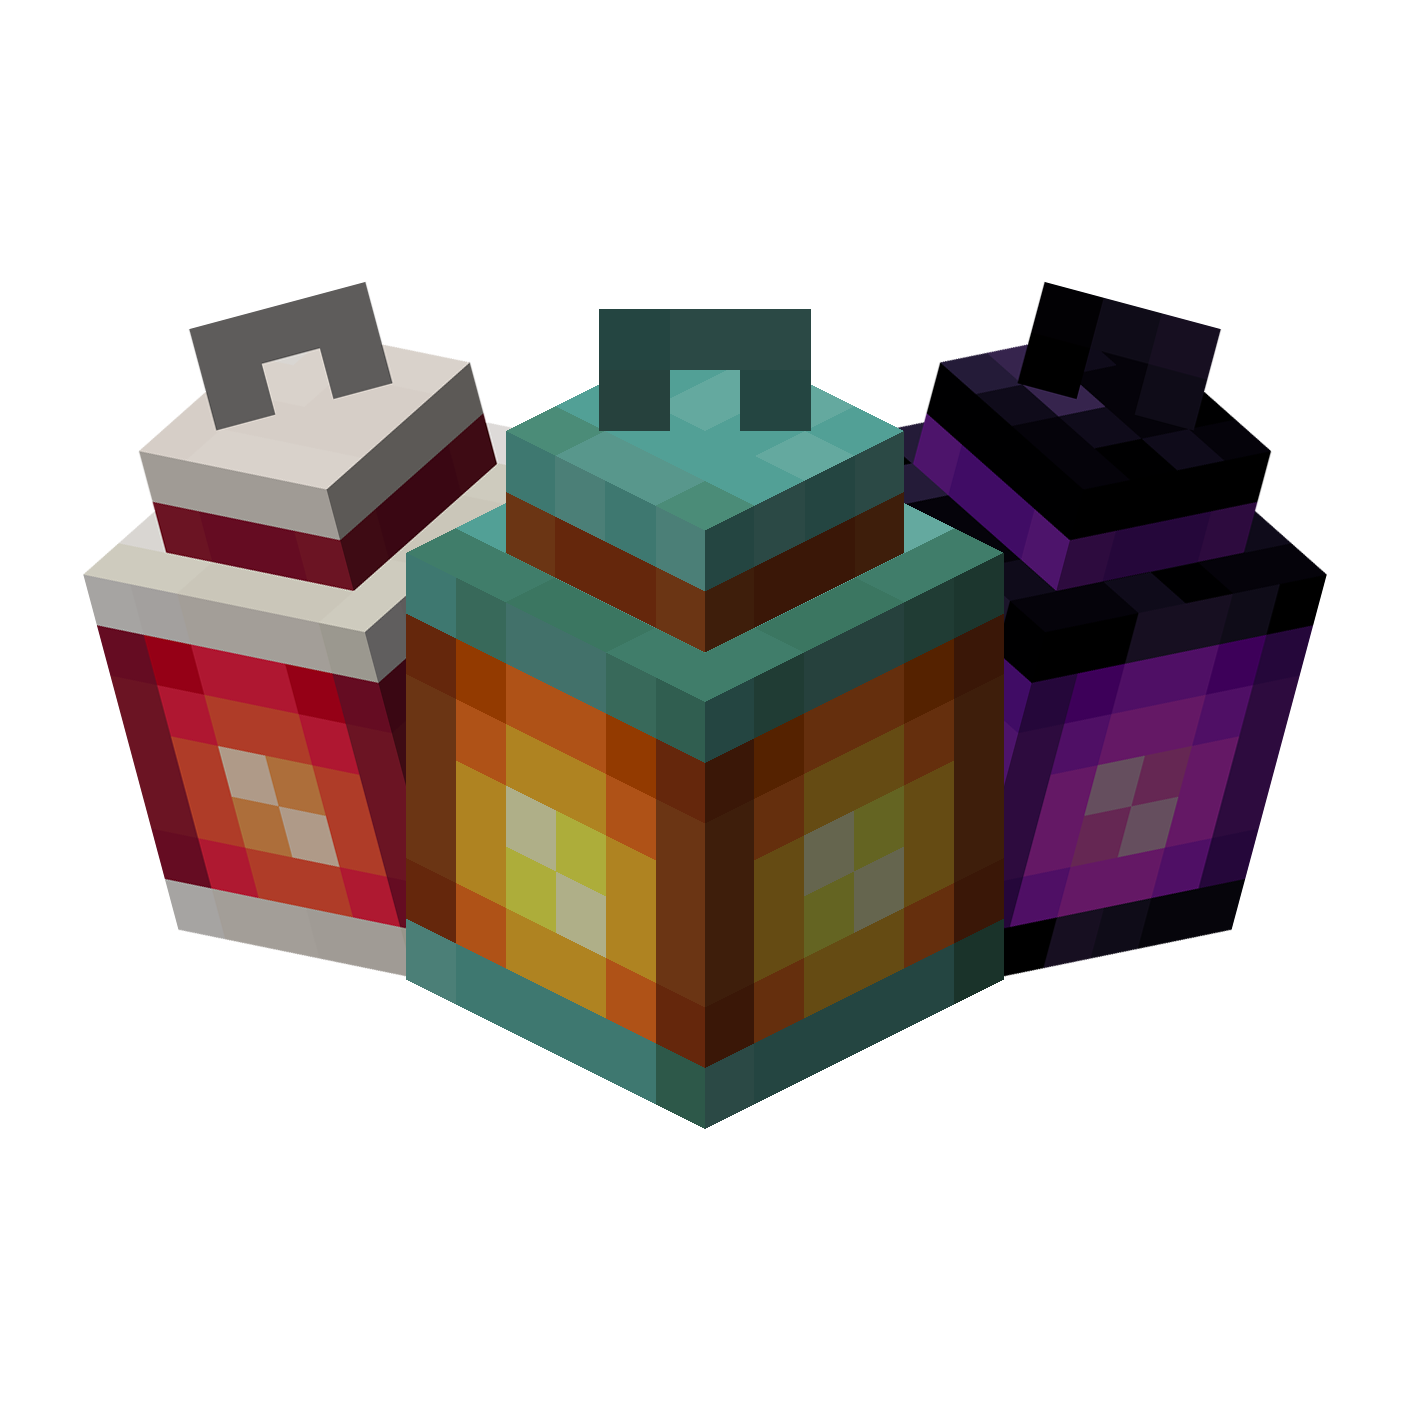 Additional Lanterns project avatar